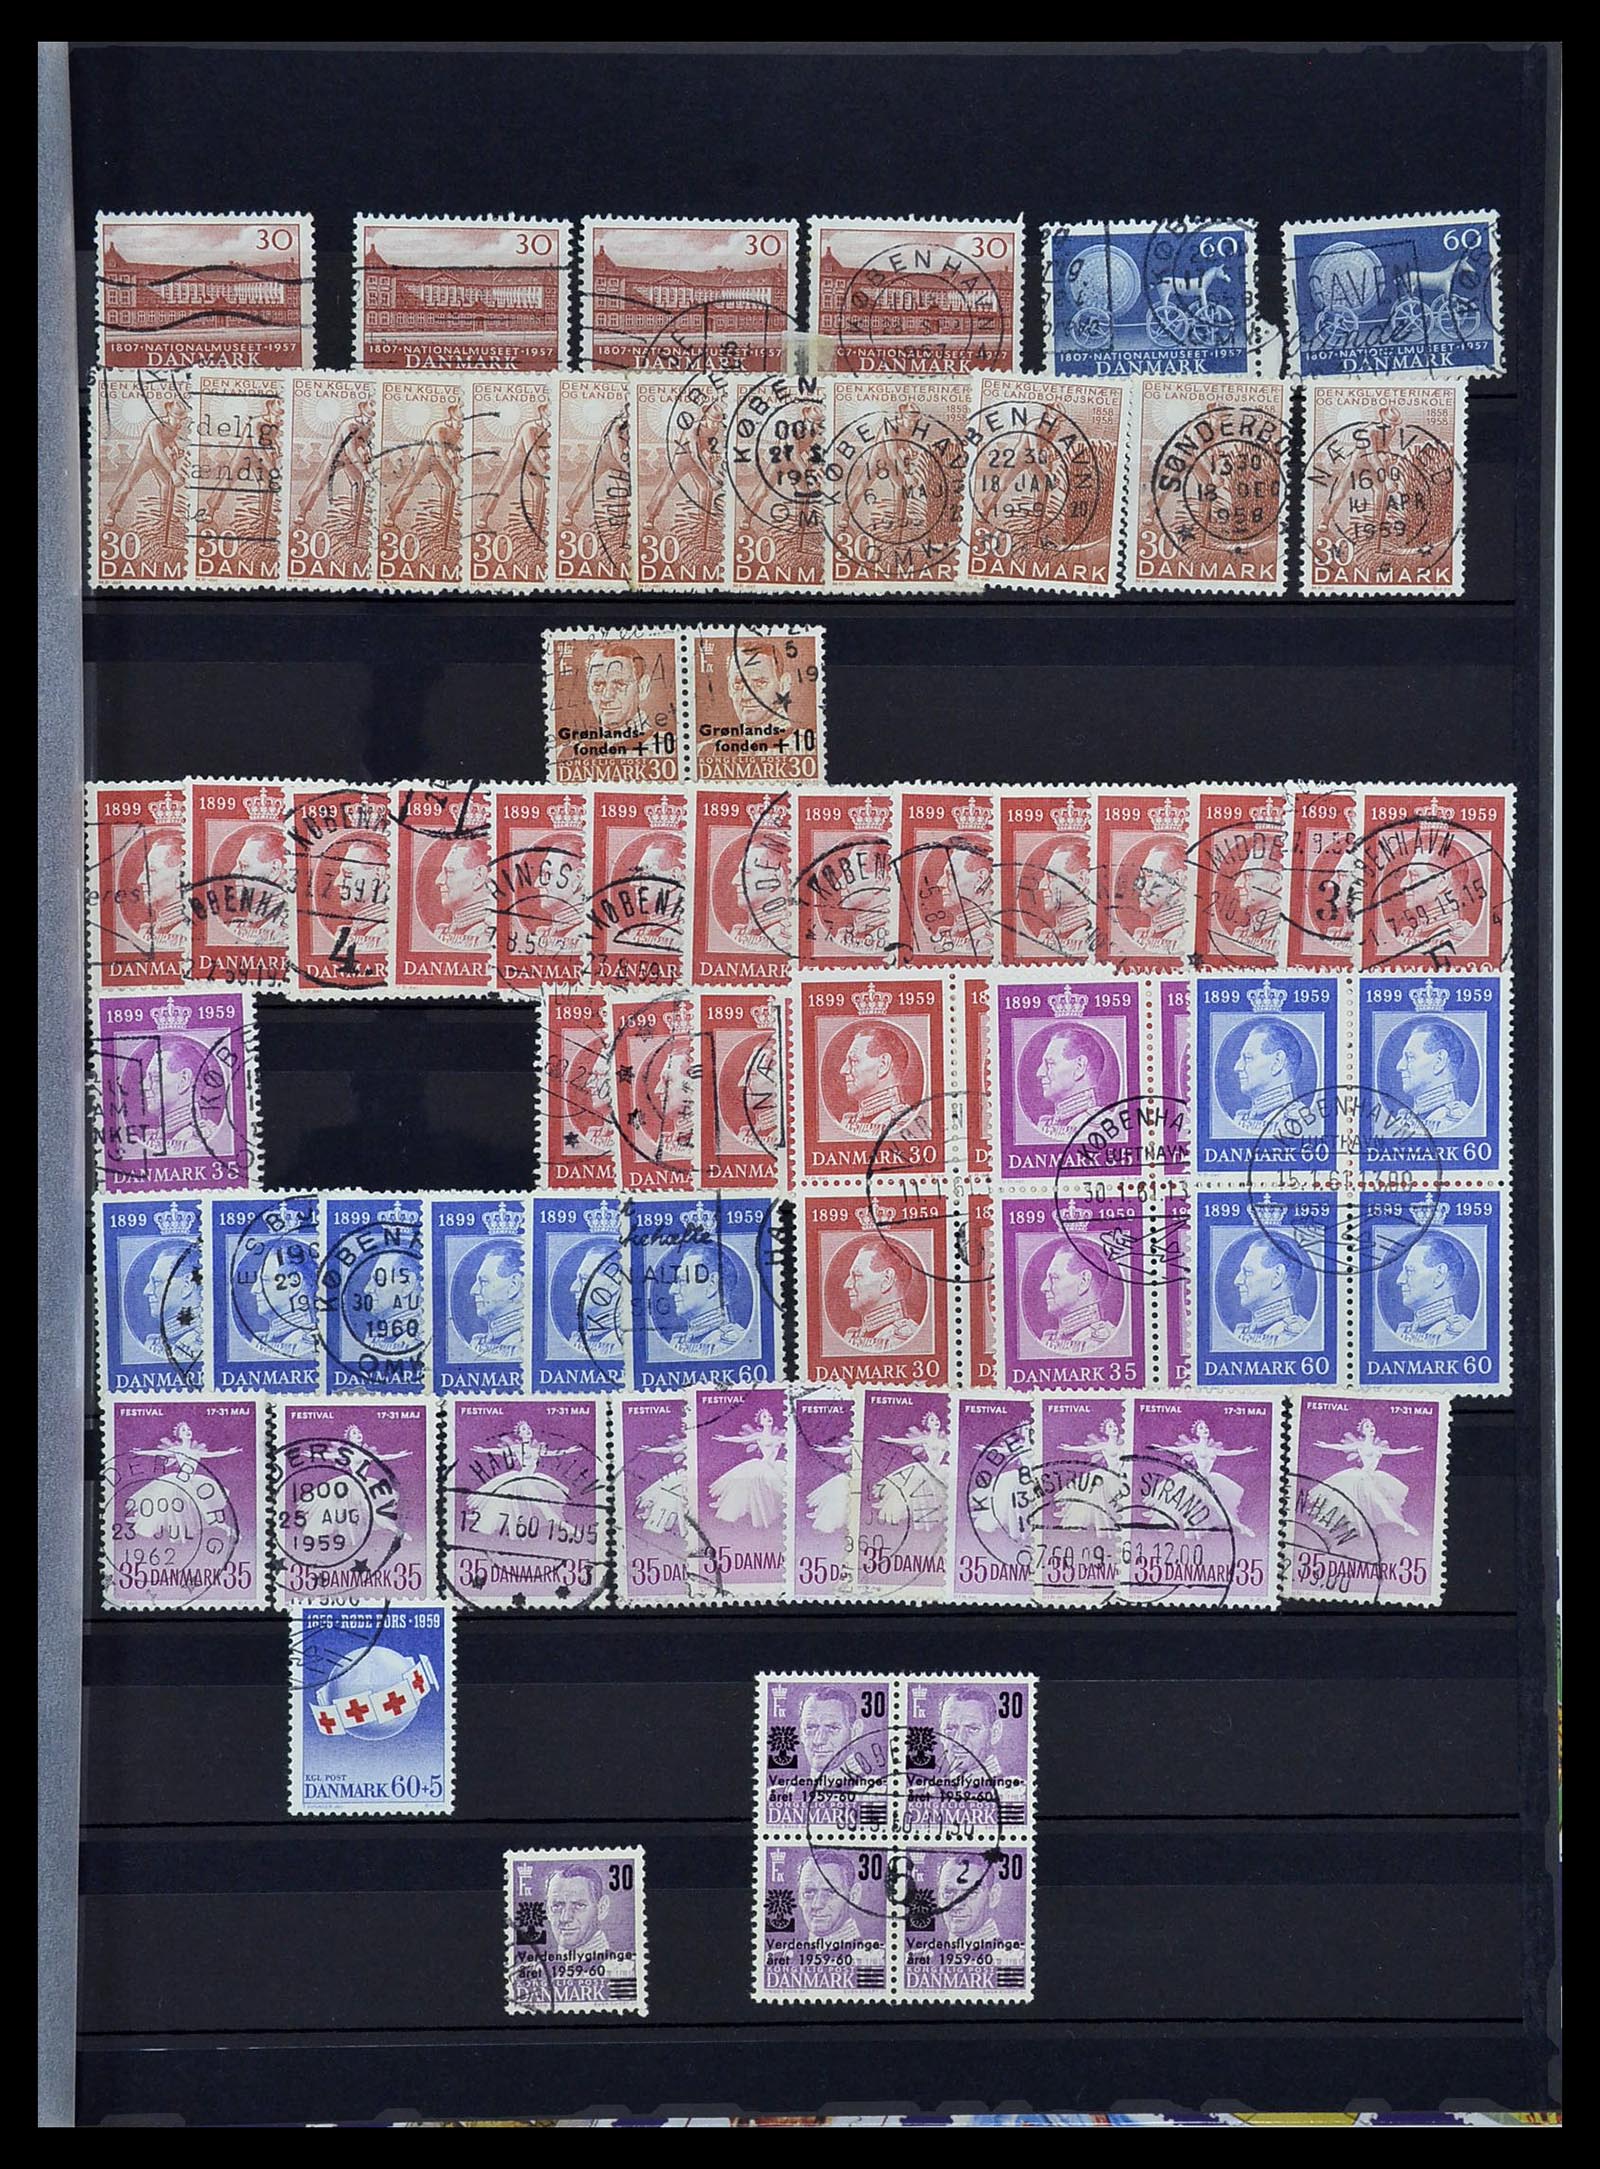 34313 426 - Stamp collection 34313 Scandinavia 1856-1990.